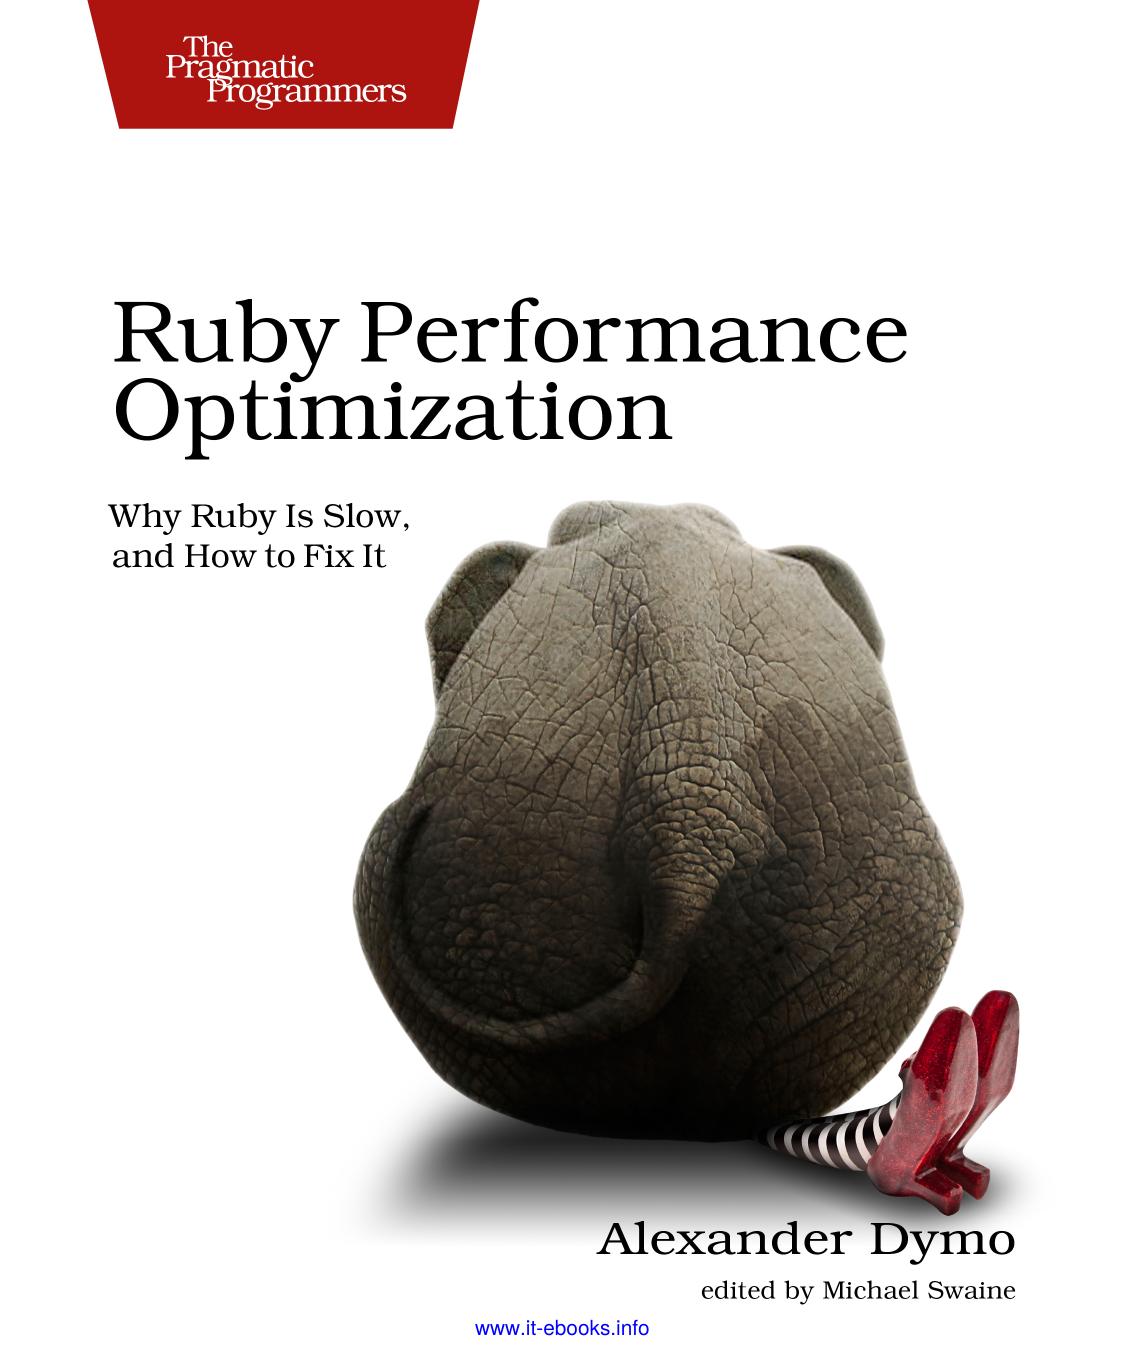 Ruby Performance Optimization by Alexander Dymo